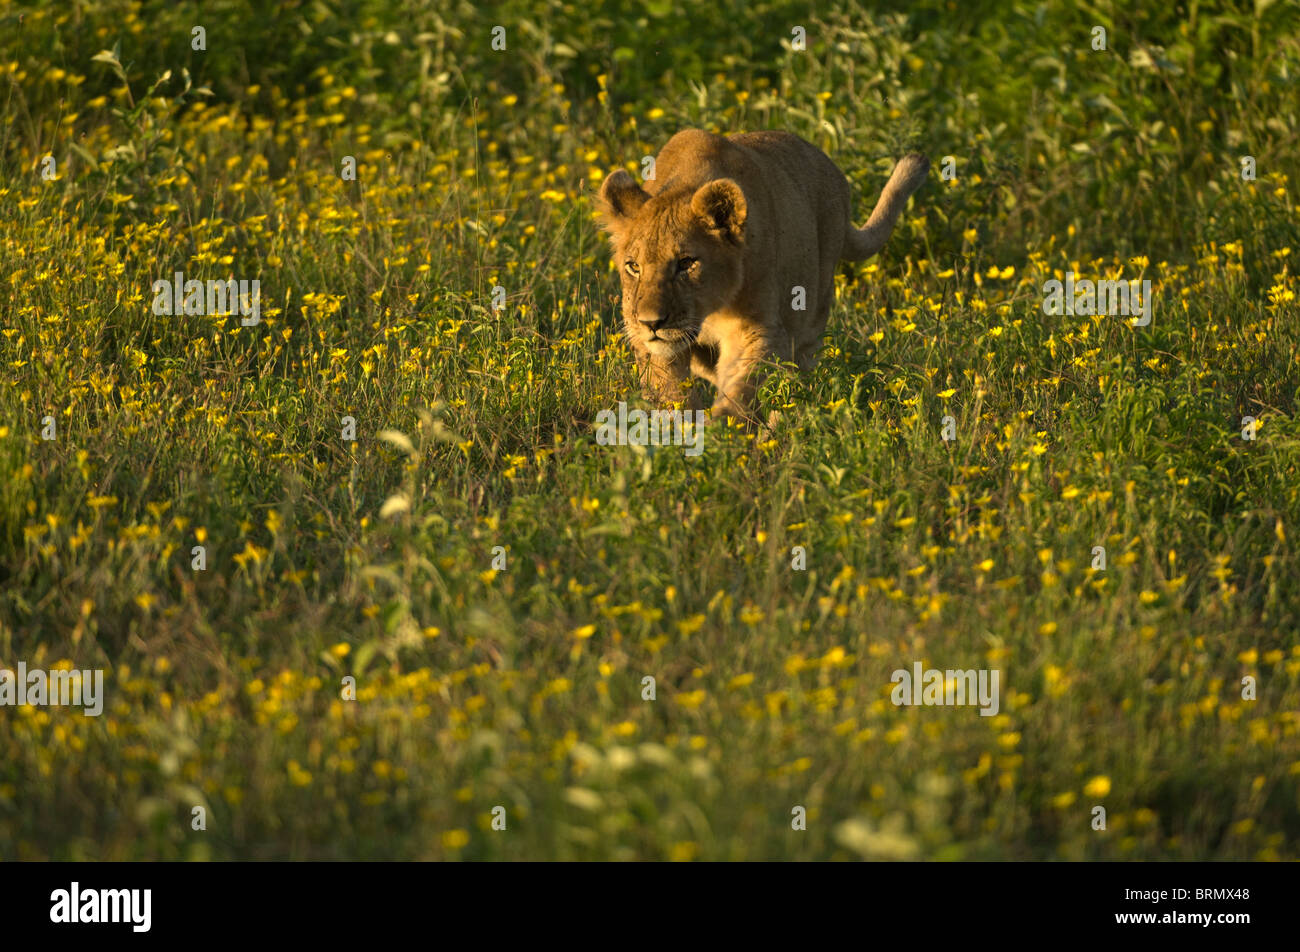 A lion cub stalks through a field of yellow Bidens flowers Stock Photo